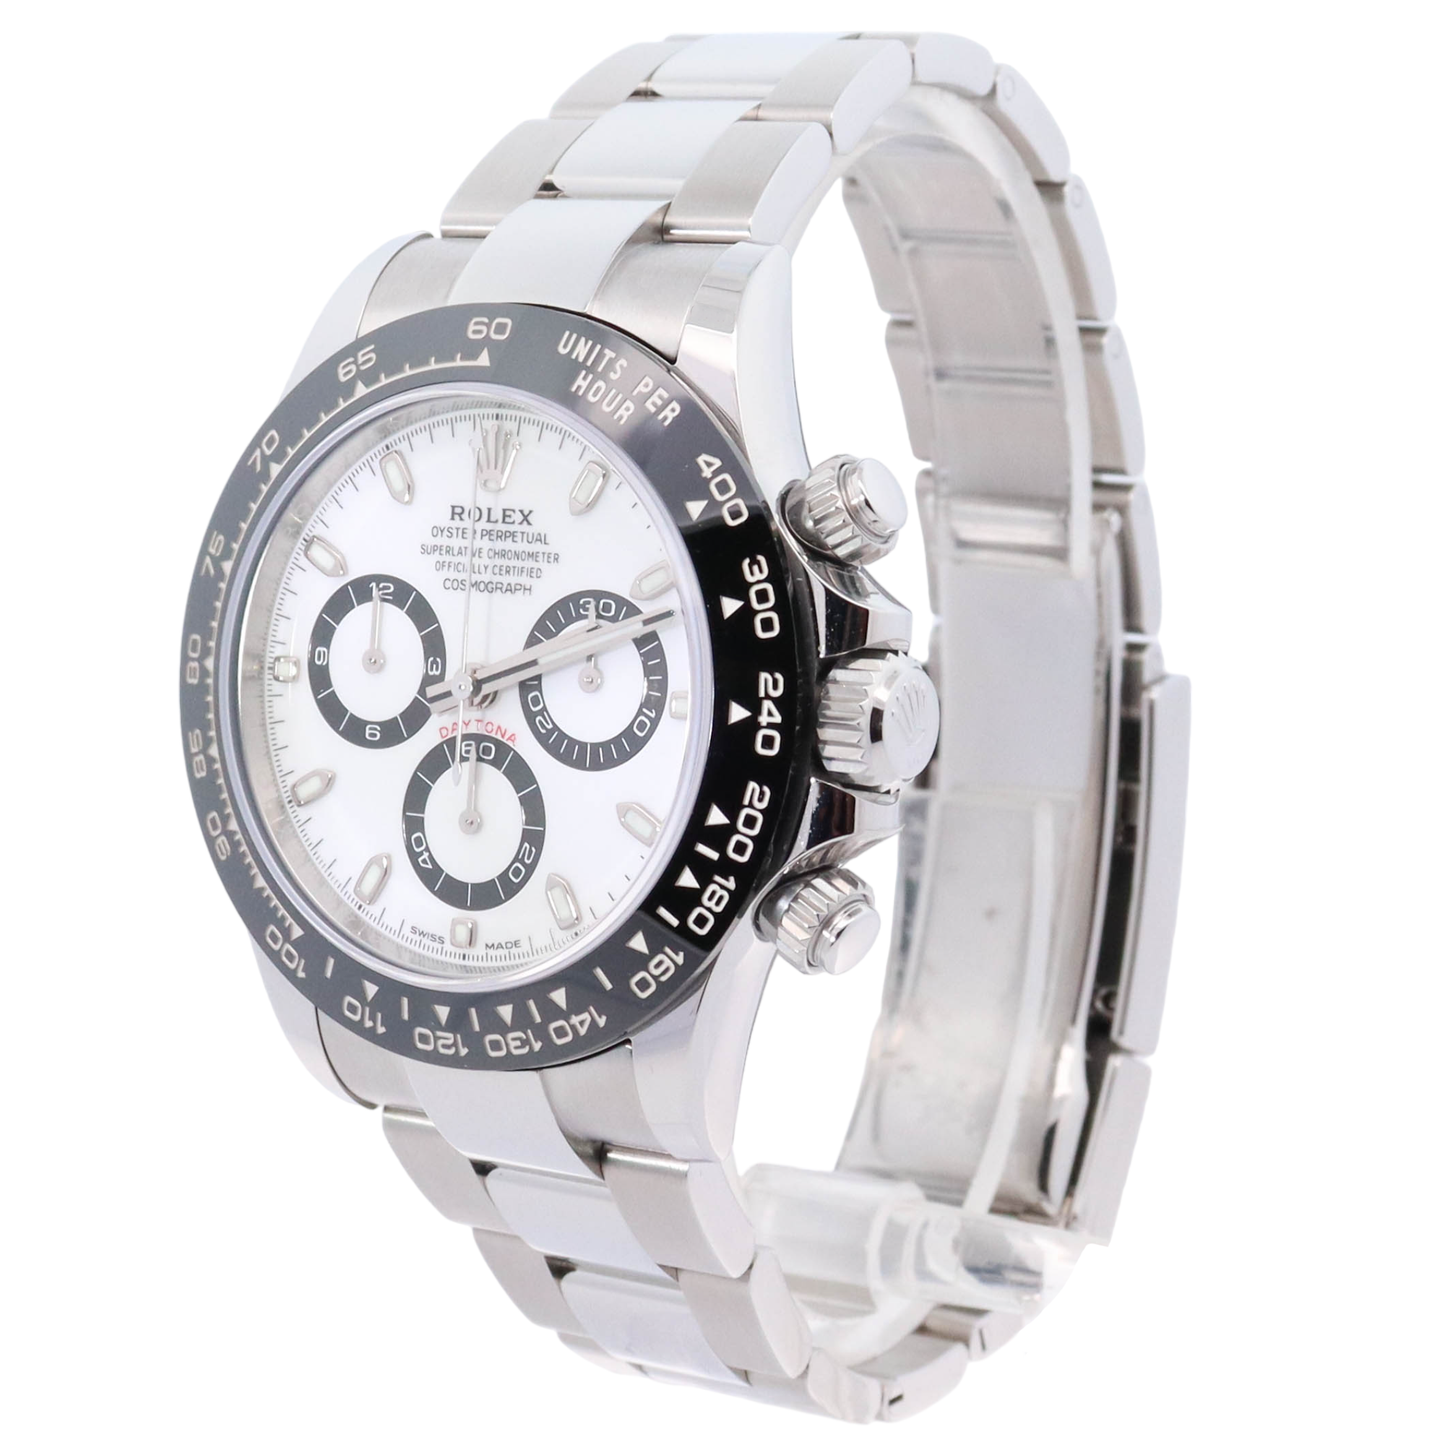 Rolex Daytona "Panda" 40mm Stainless Steel  White Chronograph Dial Watch Reference# 116500LN - Happy Jewelers Fine Jewelry Lifetime Warranty